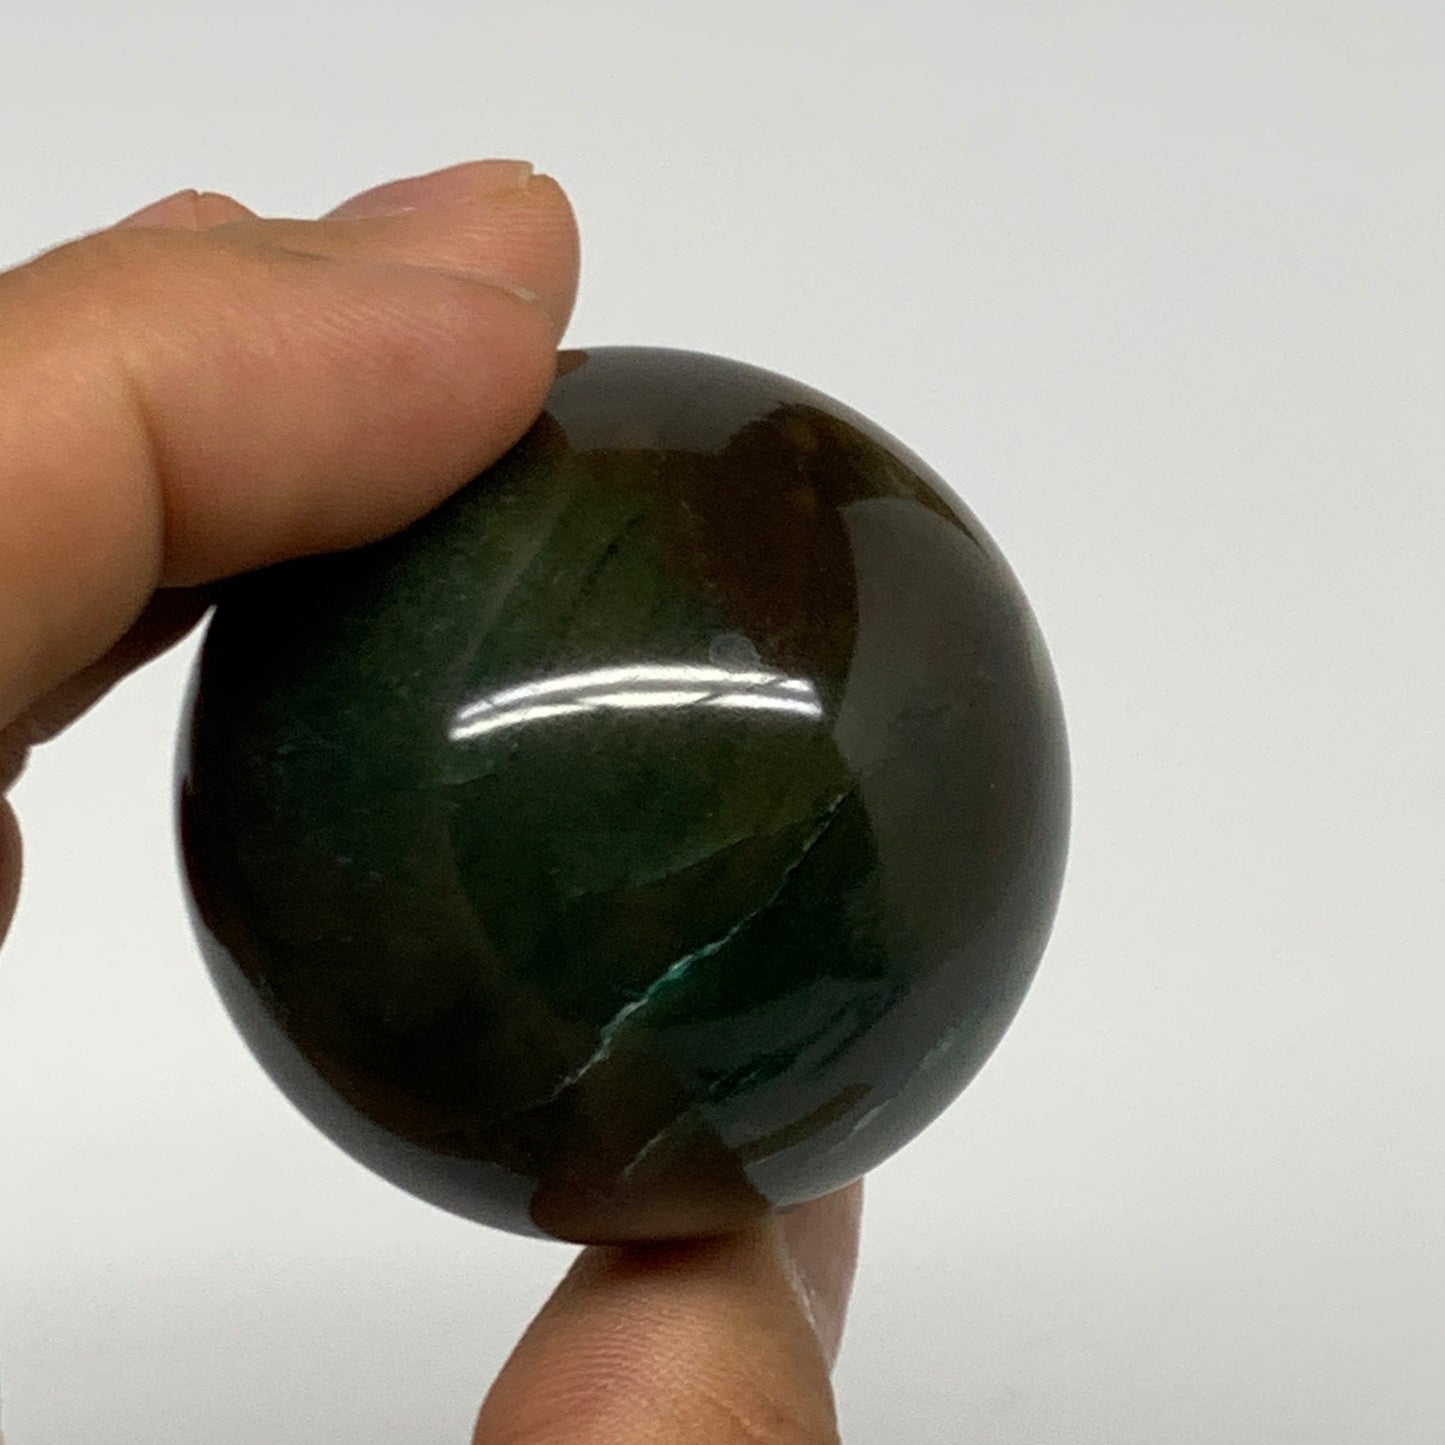 106.2g, 1.6"(42mm) Green Zade Stone Sphere Gemstone,Healing Crystal, B27163